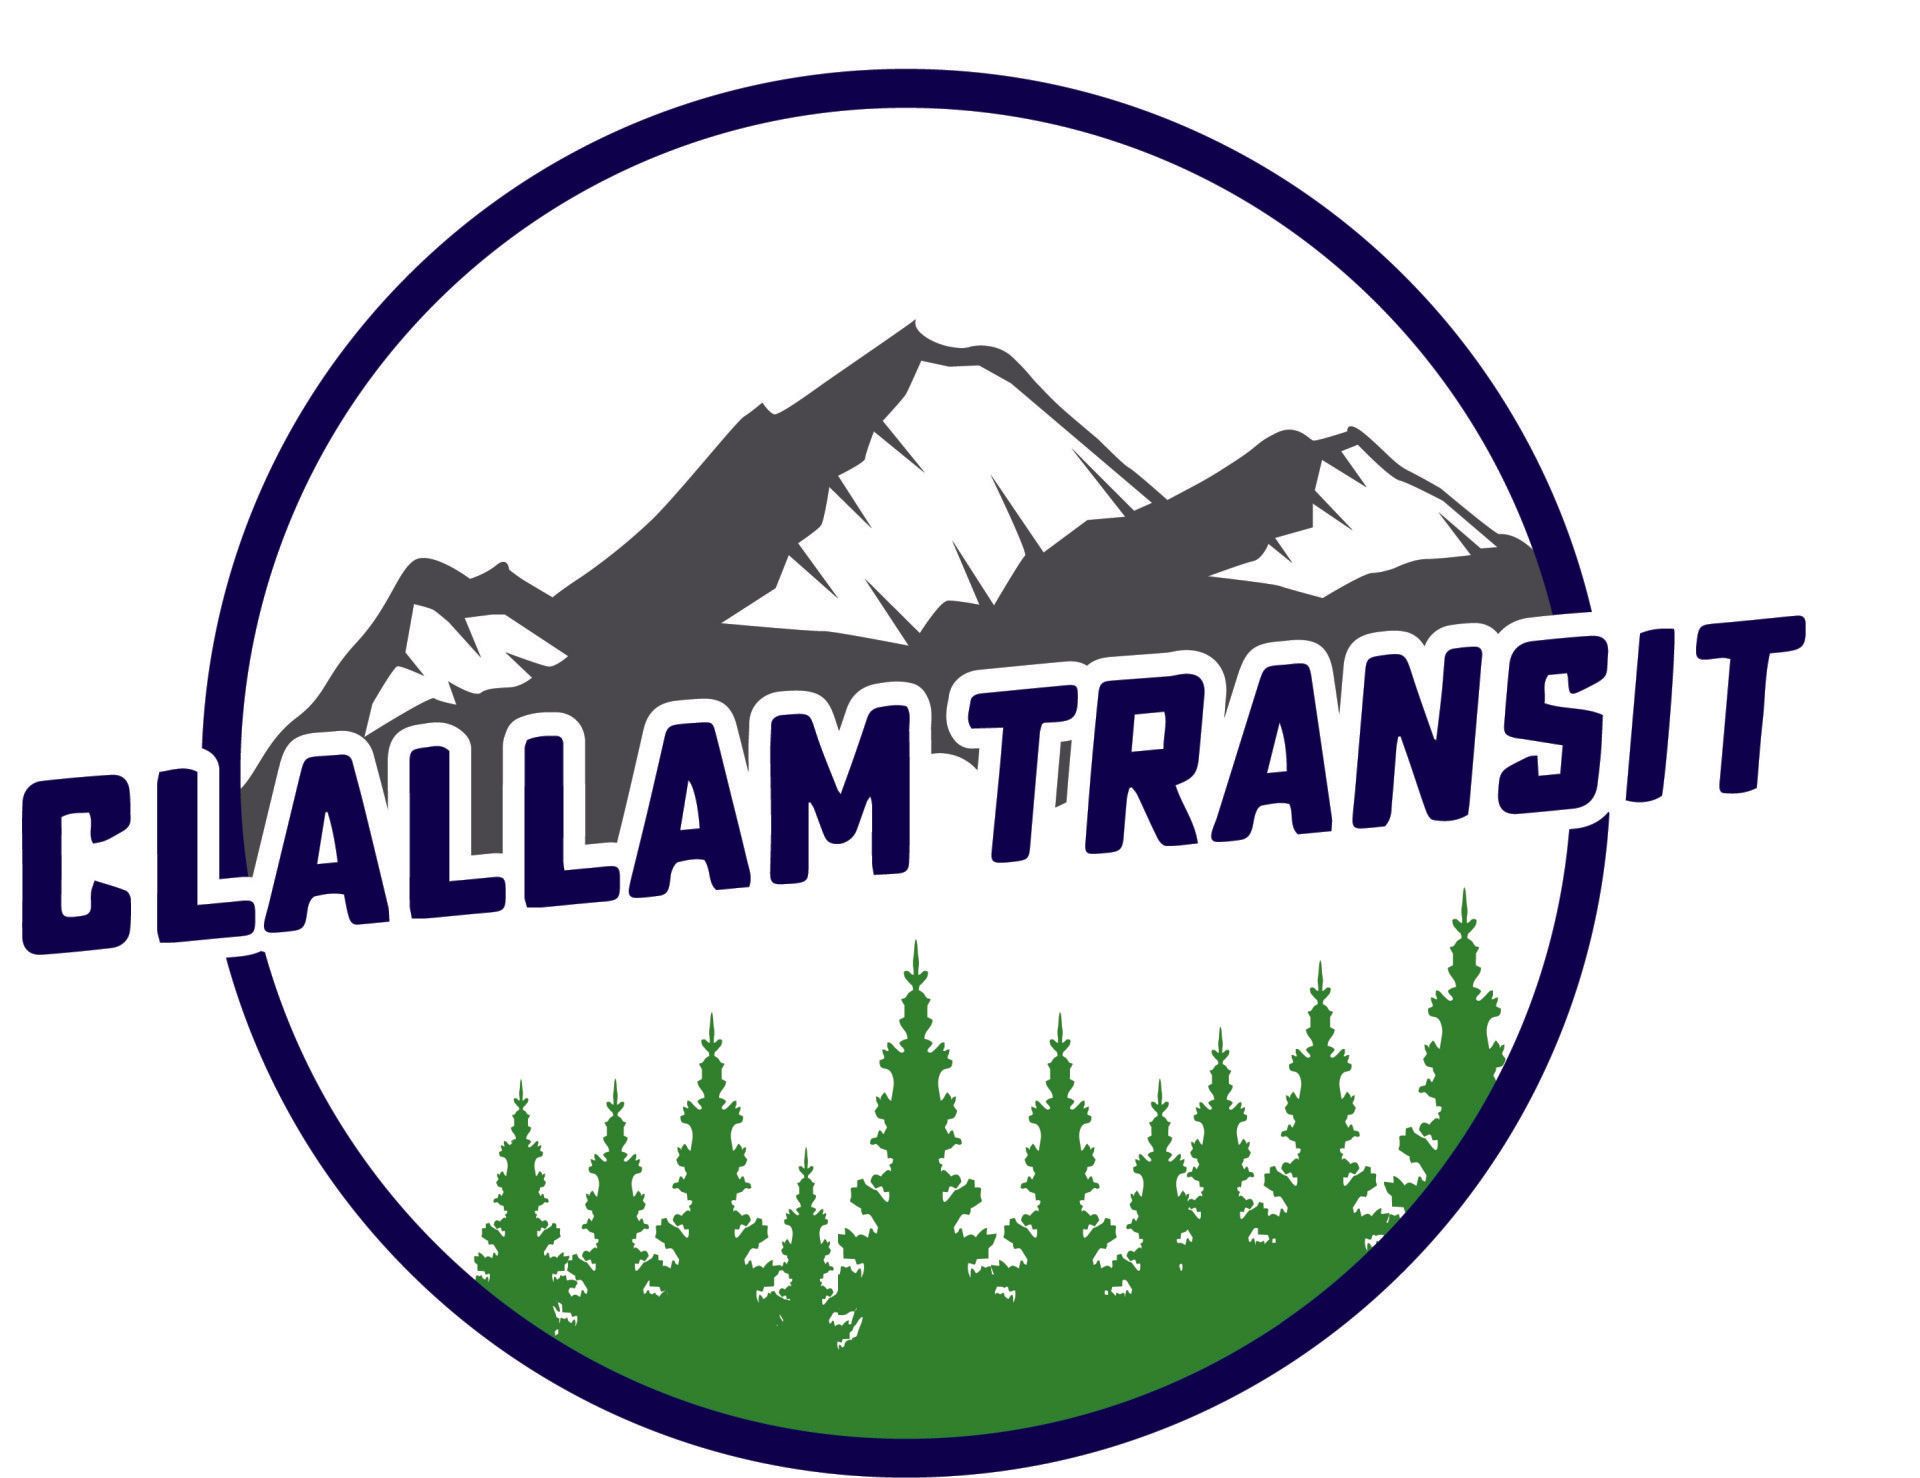 Clallam Transit